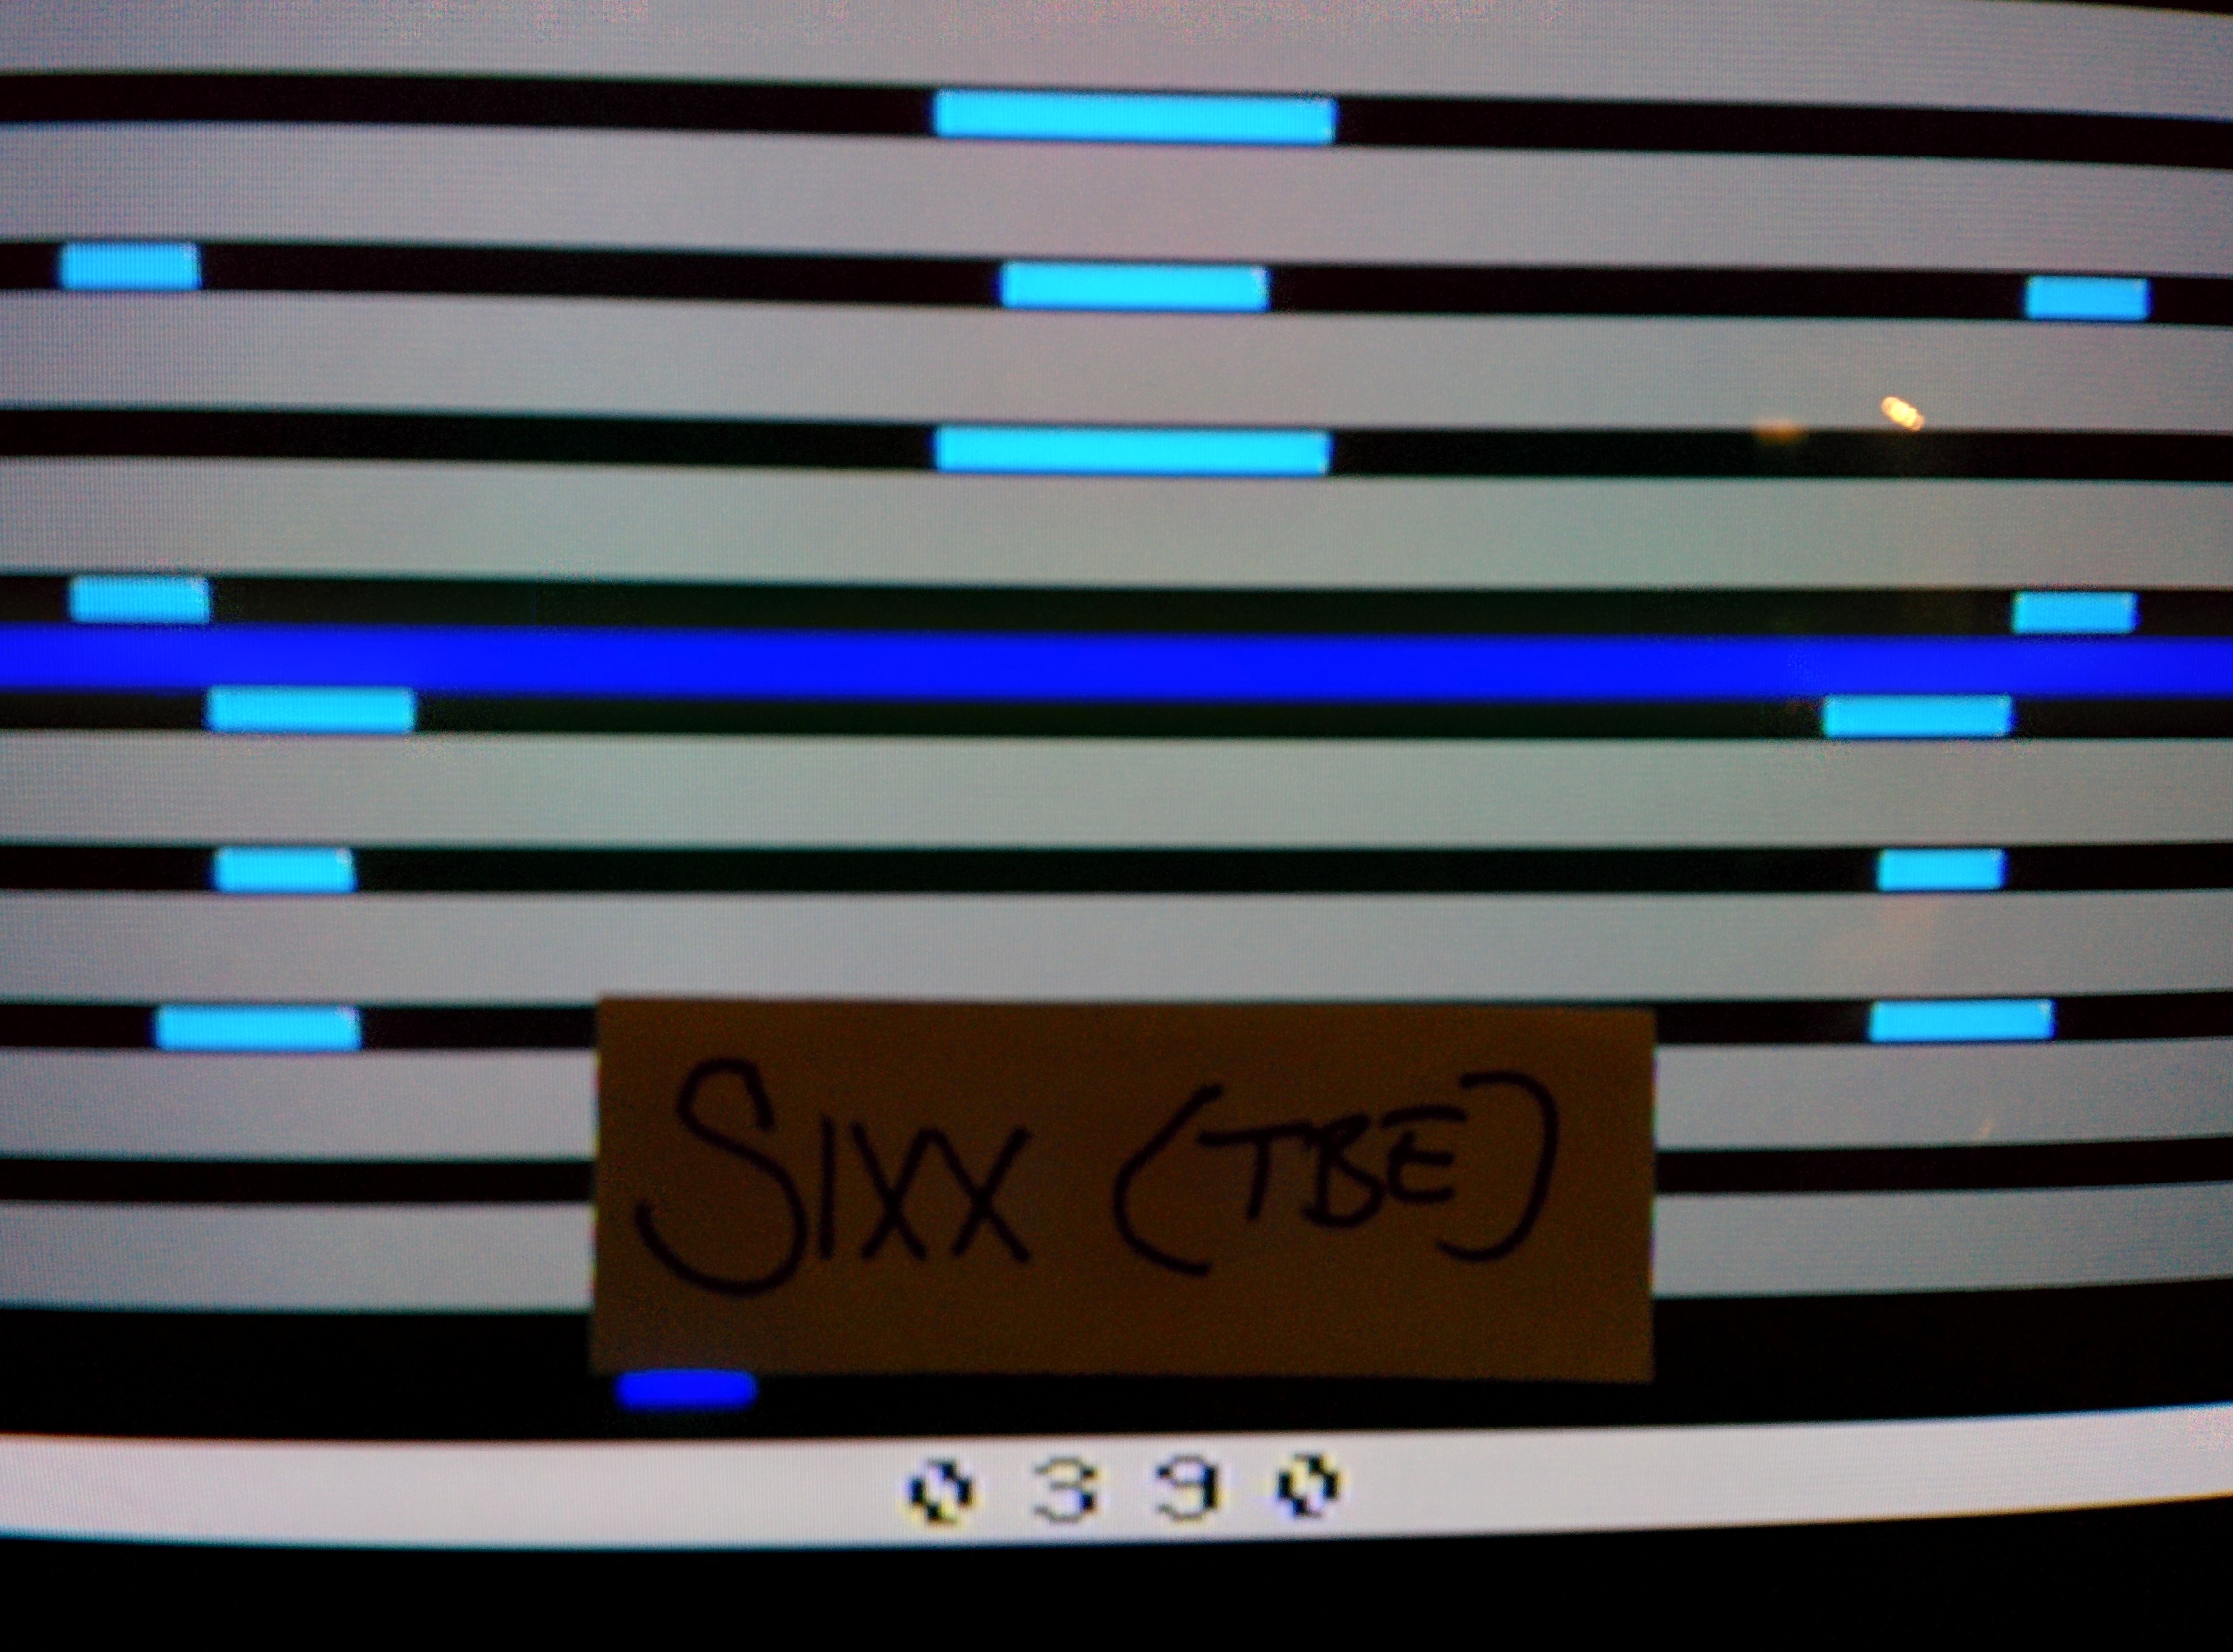 Sixx: Backfire (Atari 2600 Emulated Novice/B Mode) 390 points on 2014-06-16 15:21:14